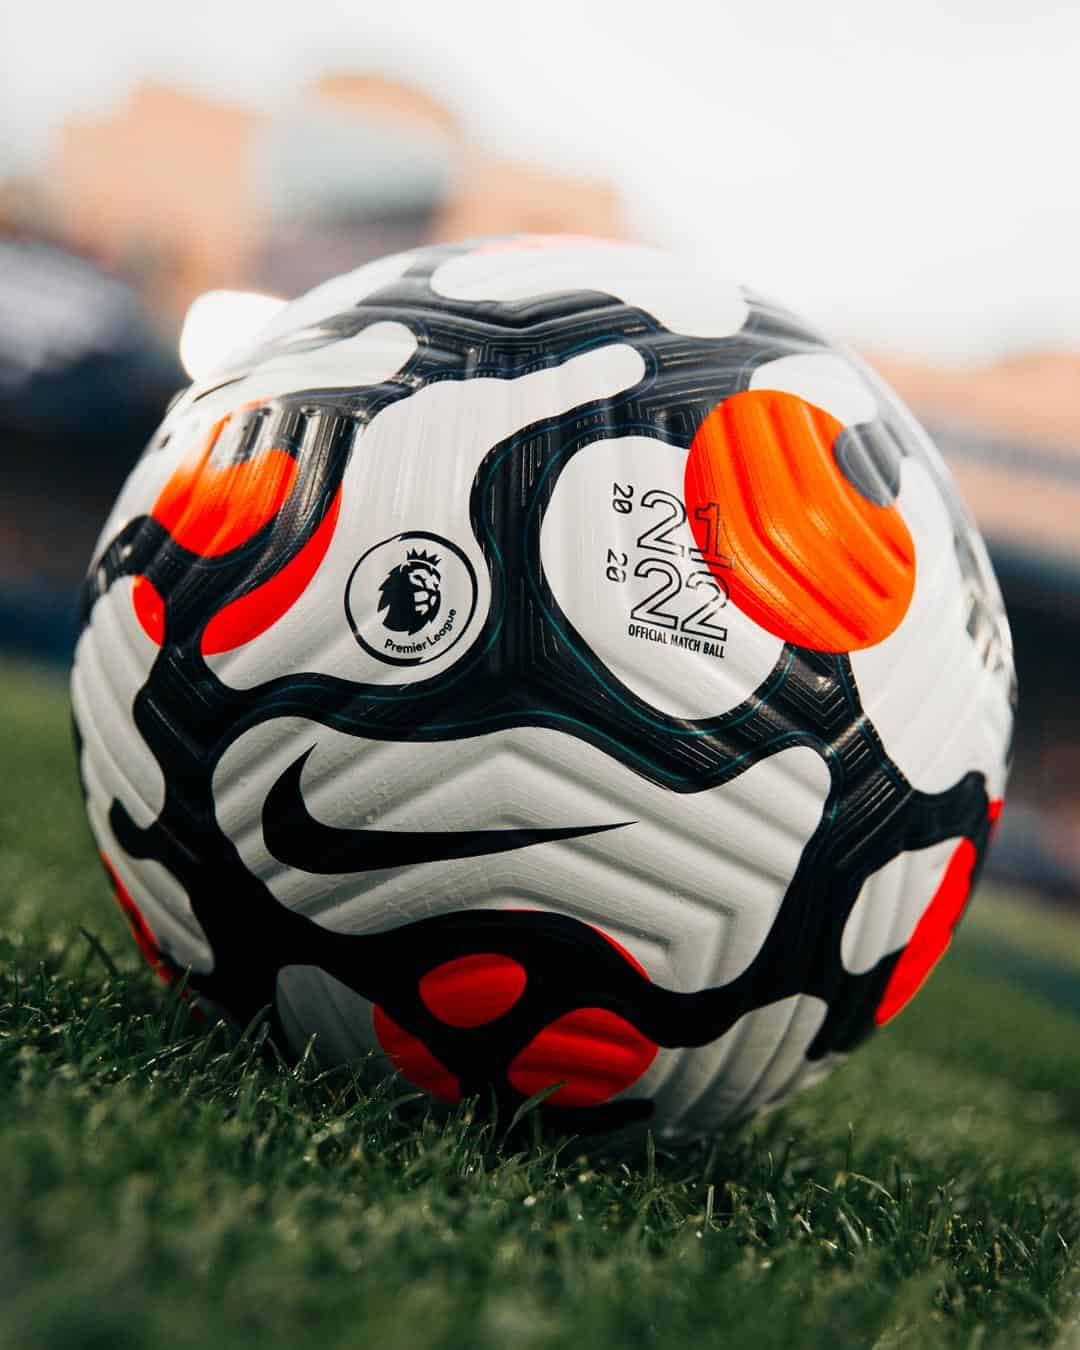 22: Nike – Balón de la Premier League 2021/2022 presentado